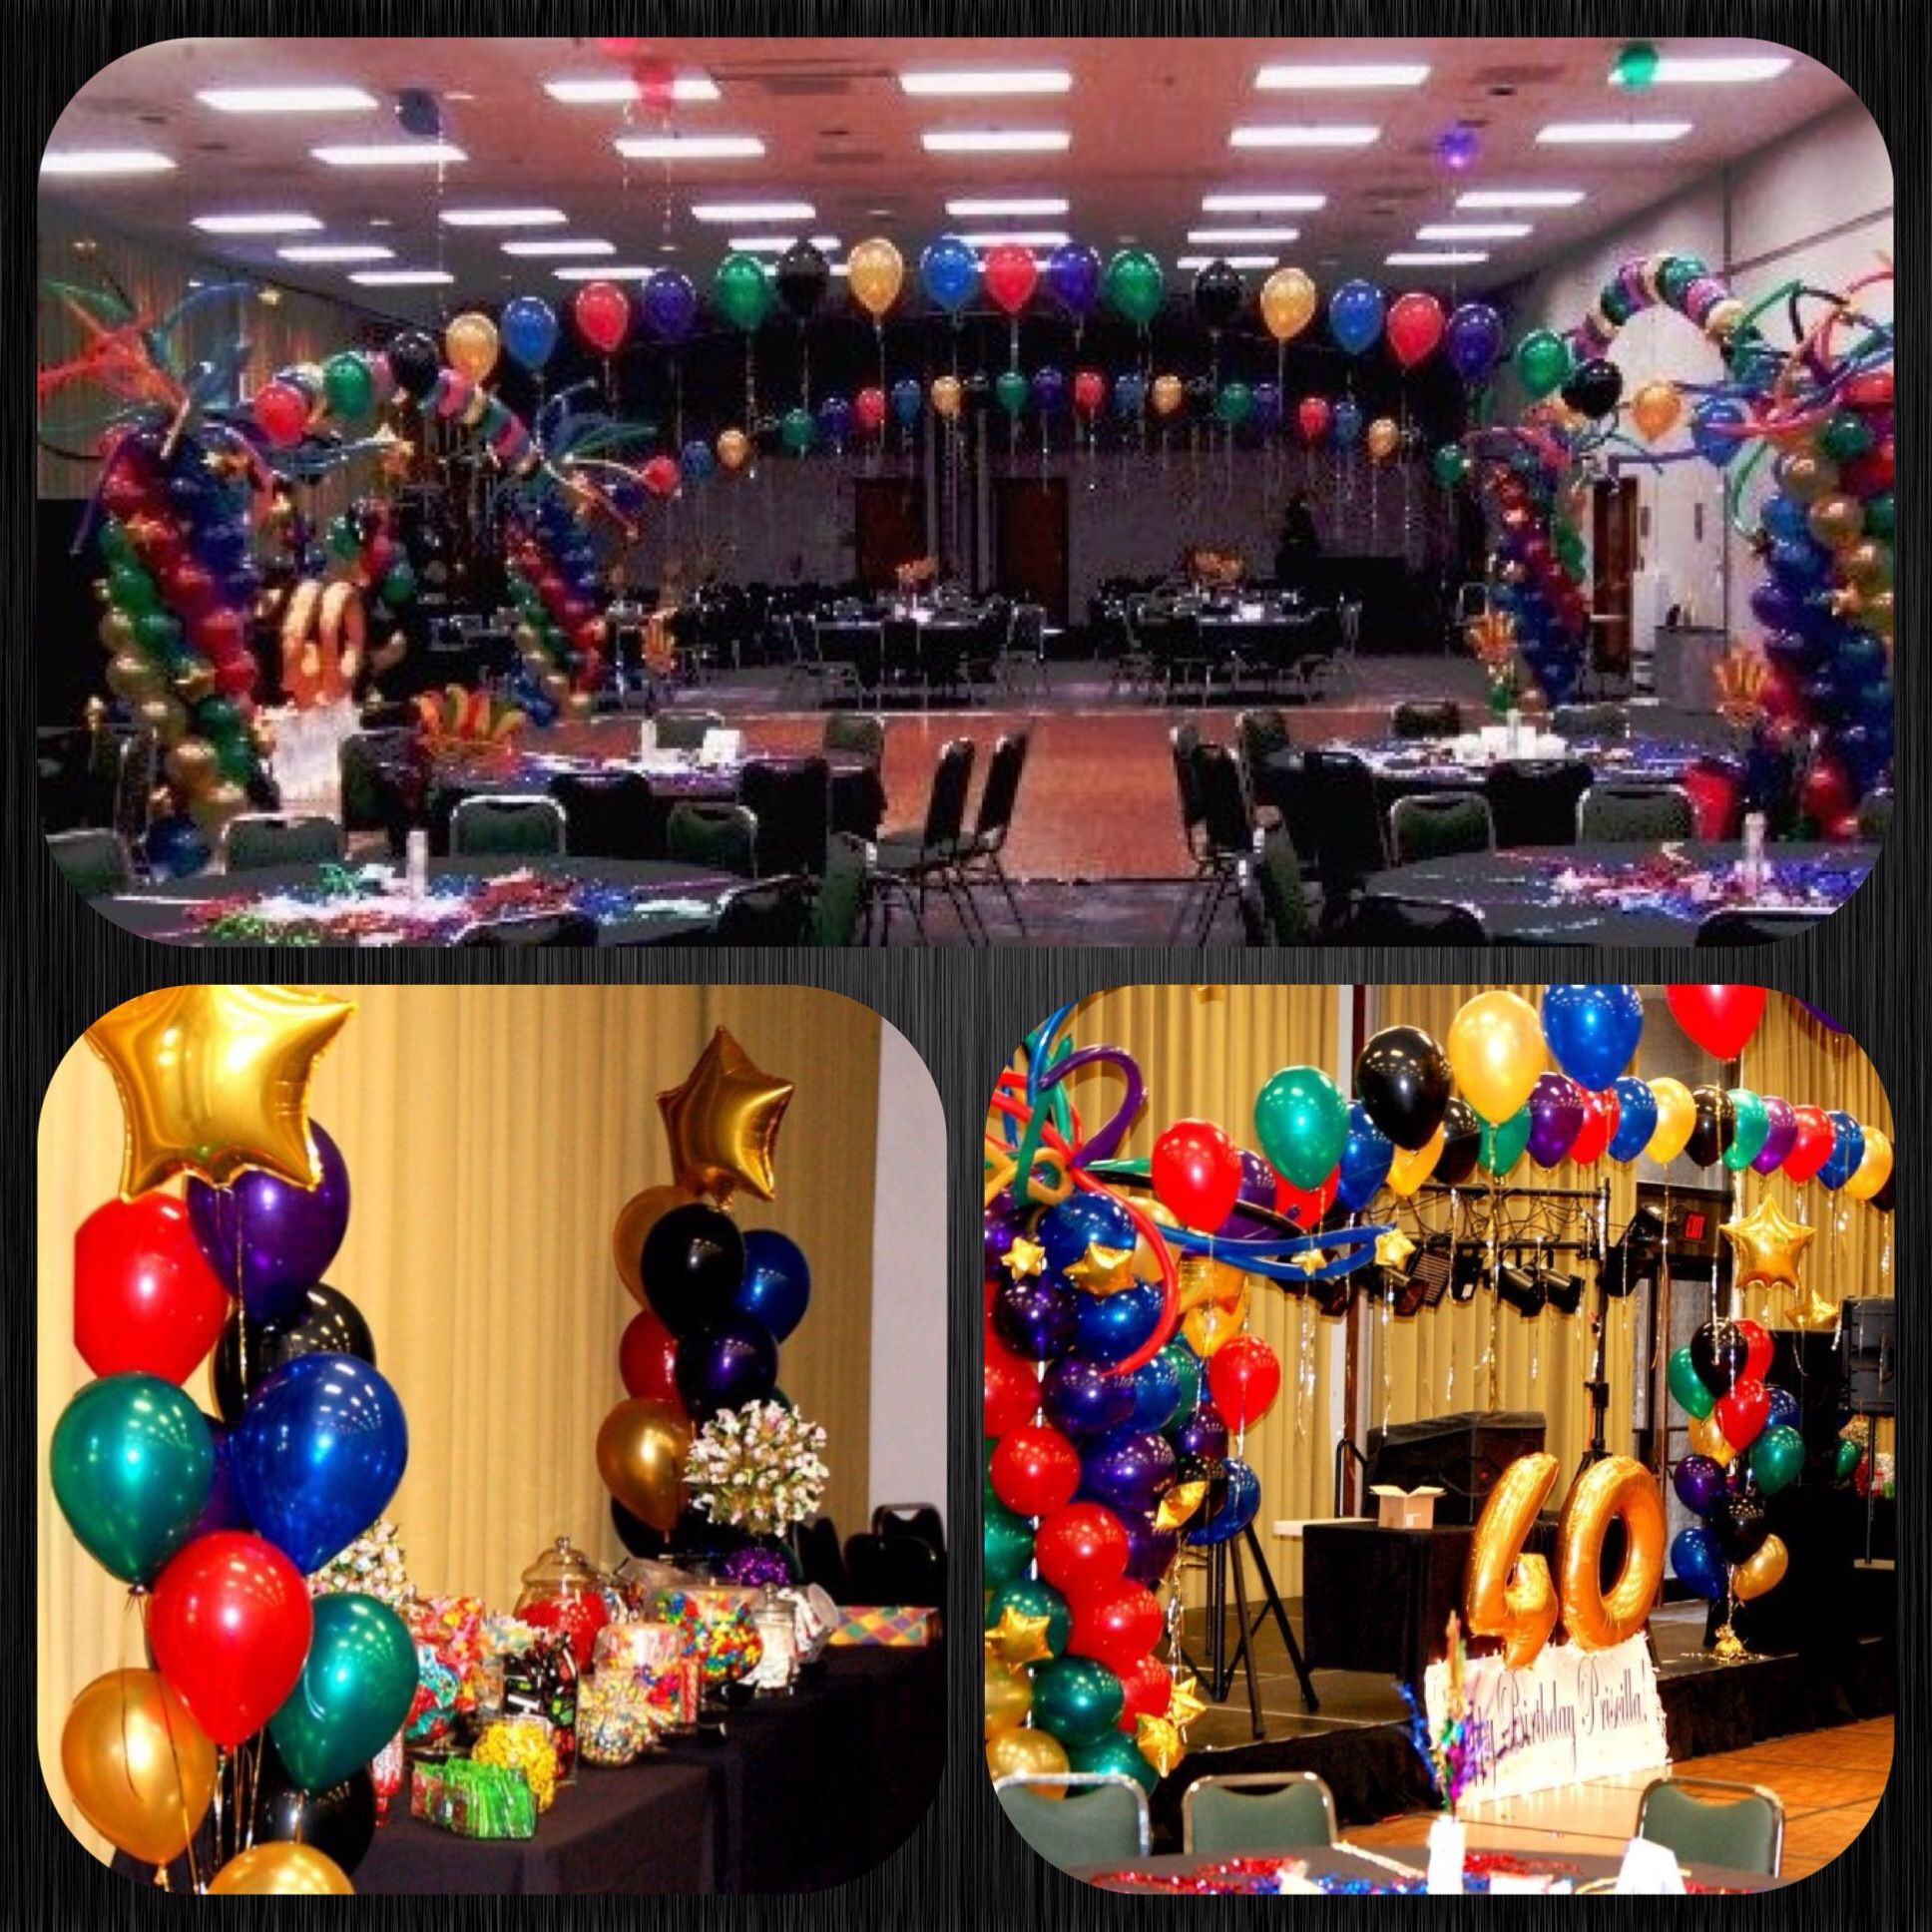 Best ideas about 40th Birthday Decoration Ideas
. Save or Pin 40th Birthday Decor Party Ideas Now.